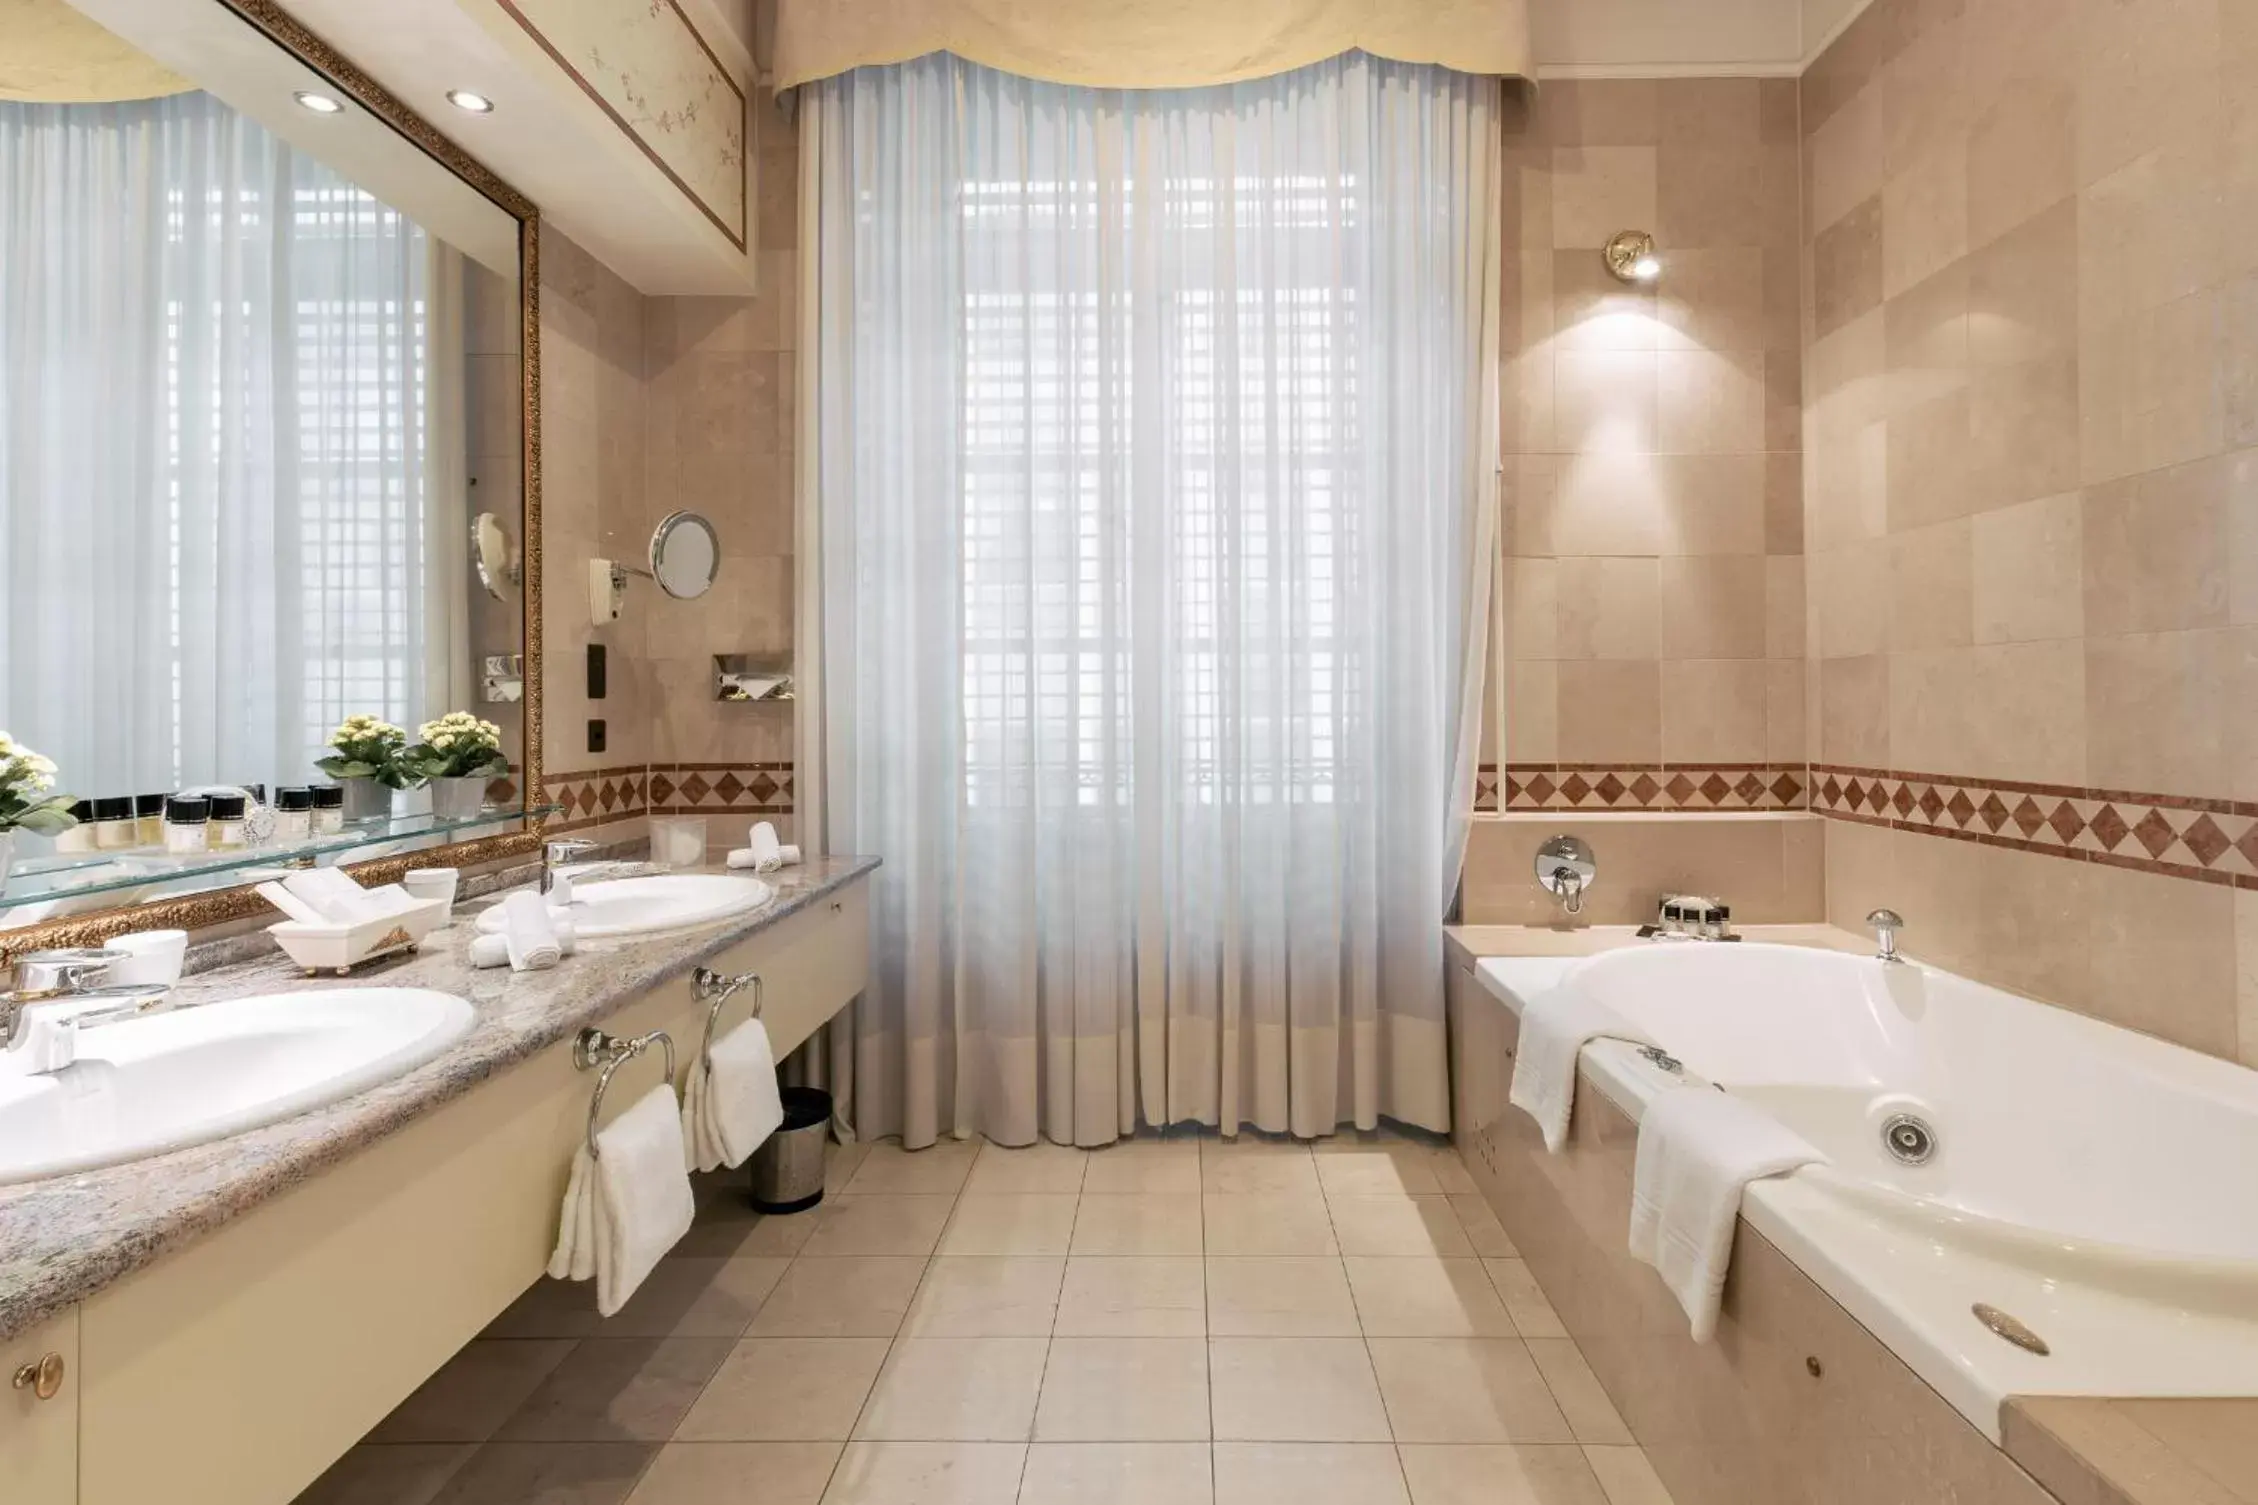 Shower, Bathroom in Hôtel Métropole Genève